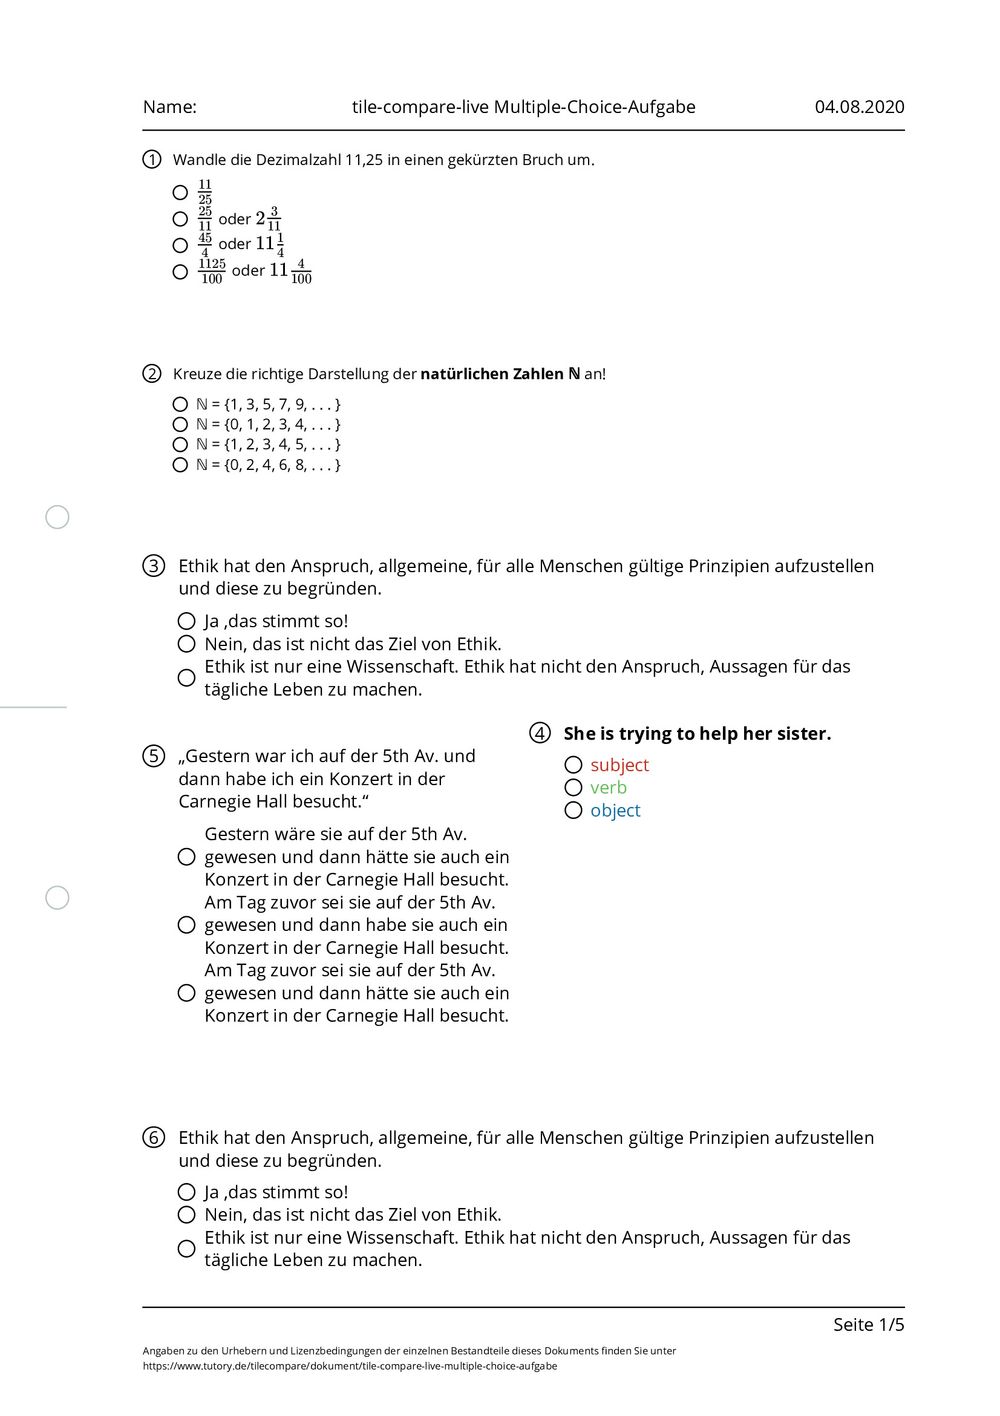 arbeitsblatt-tile-compare-live-multiple-choice-aufgabe-tutory-de